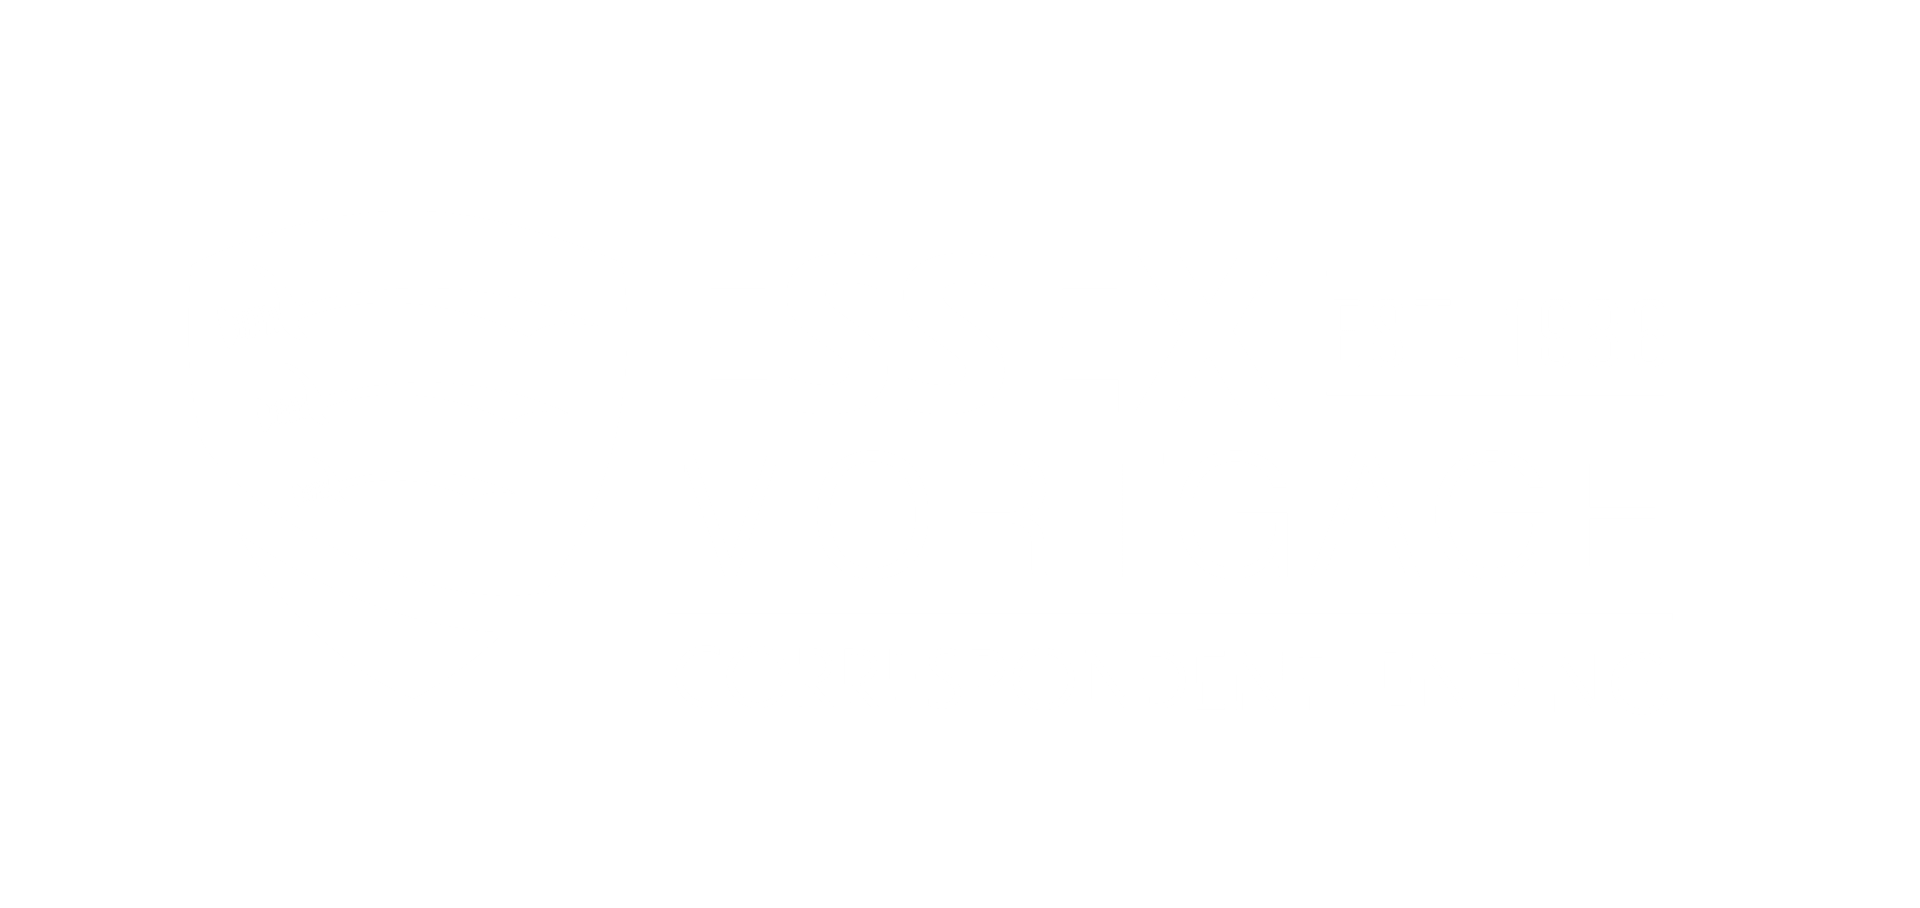 Essex Mortgage Logo